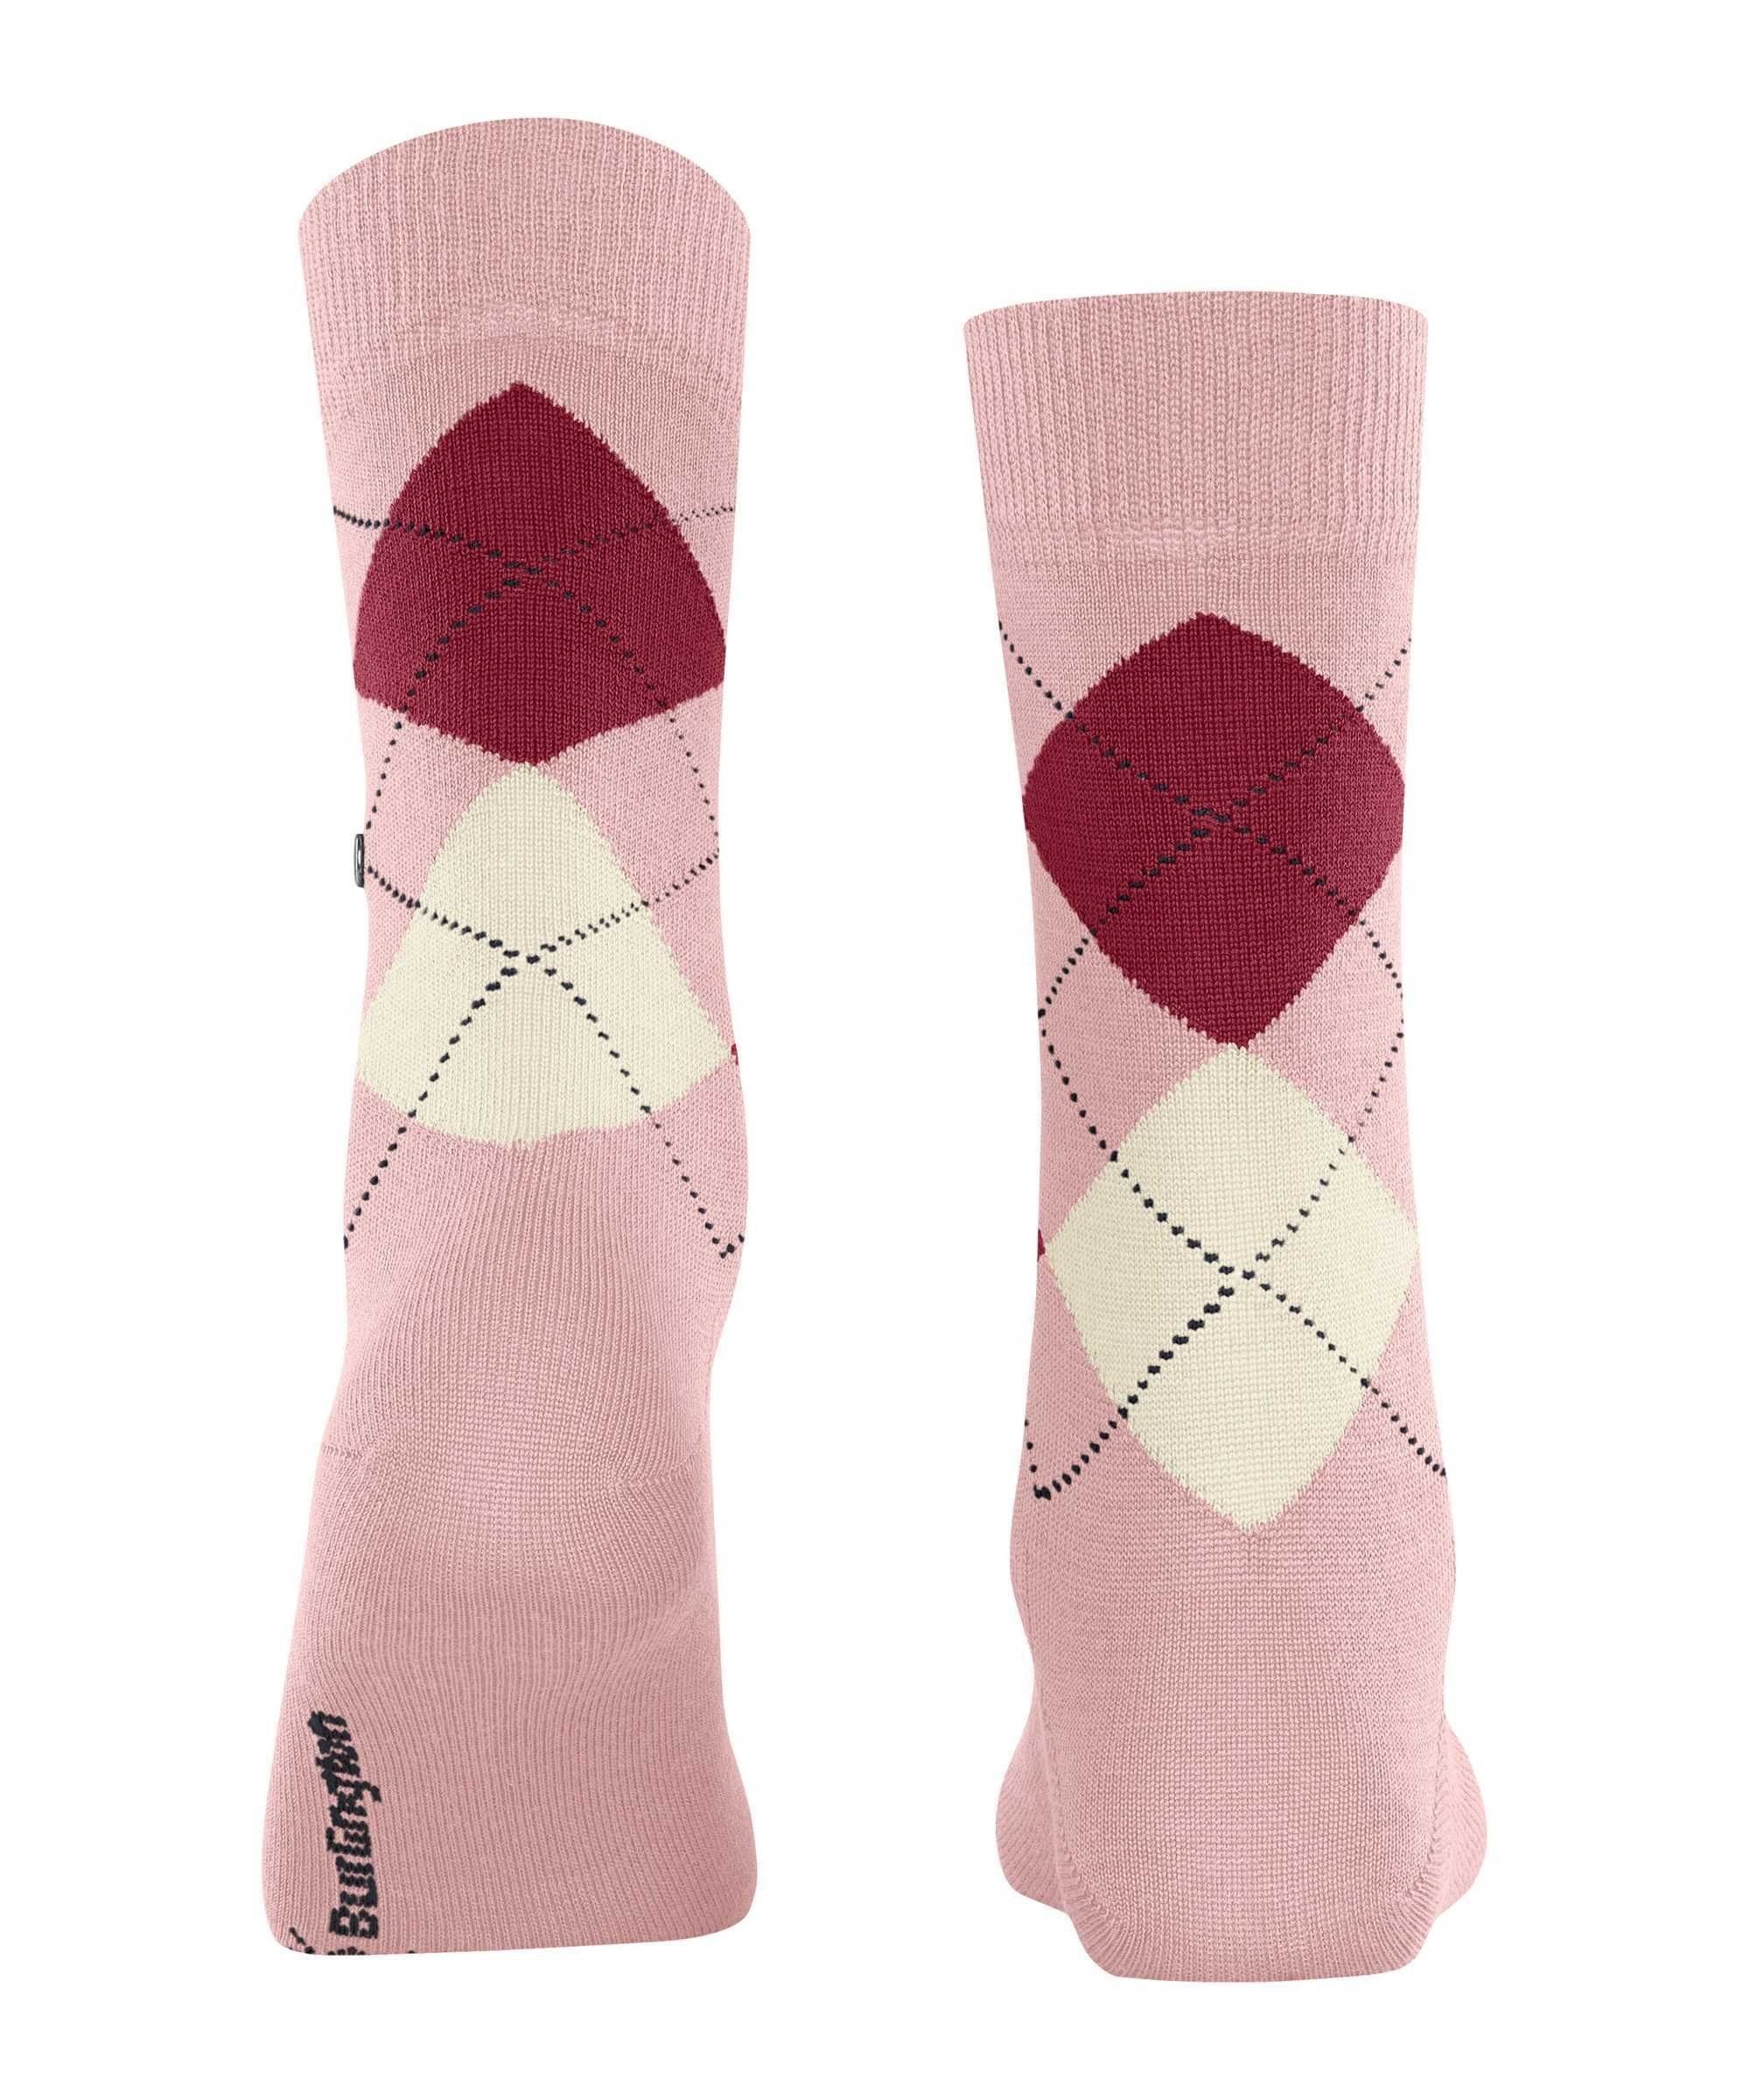 Burlington Kurzsocken Damen Socken - Rosa/Rot/Weiß Kurzstrumpf MARYLEBONE